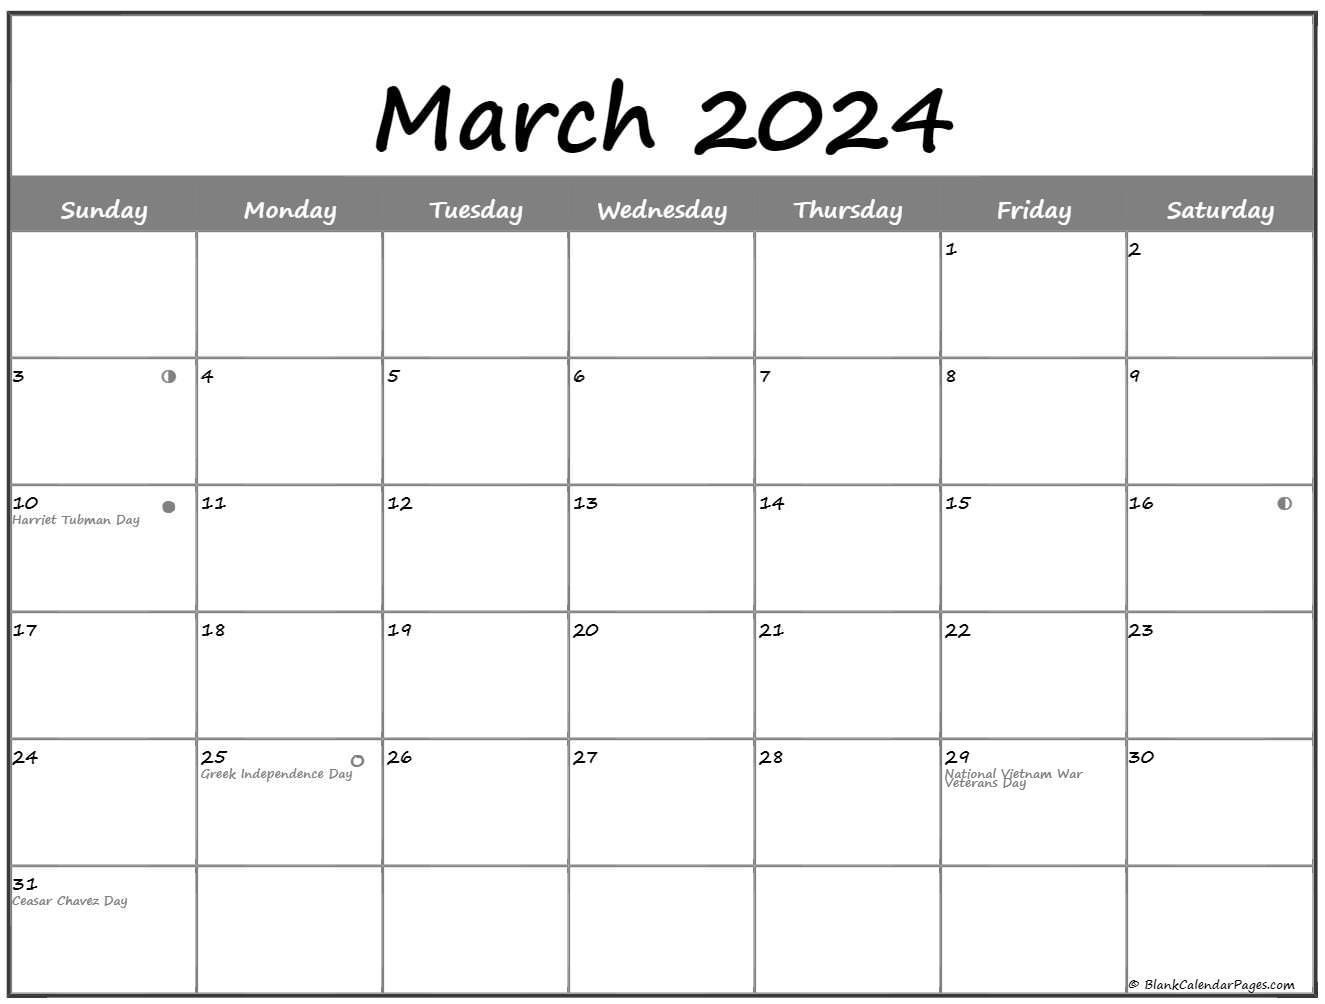 2024 Lunar Calendar Dates New The Best Review Of January 2024 Calendar Design